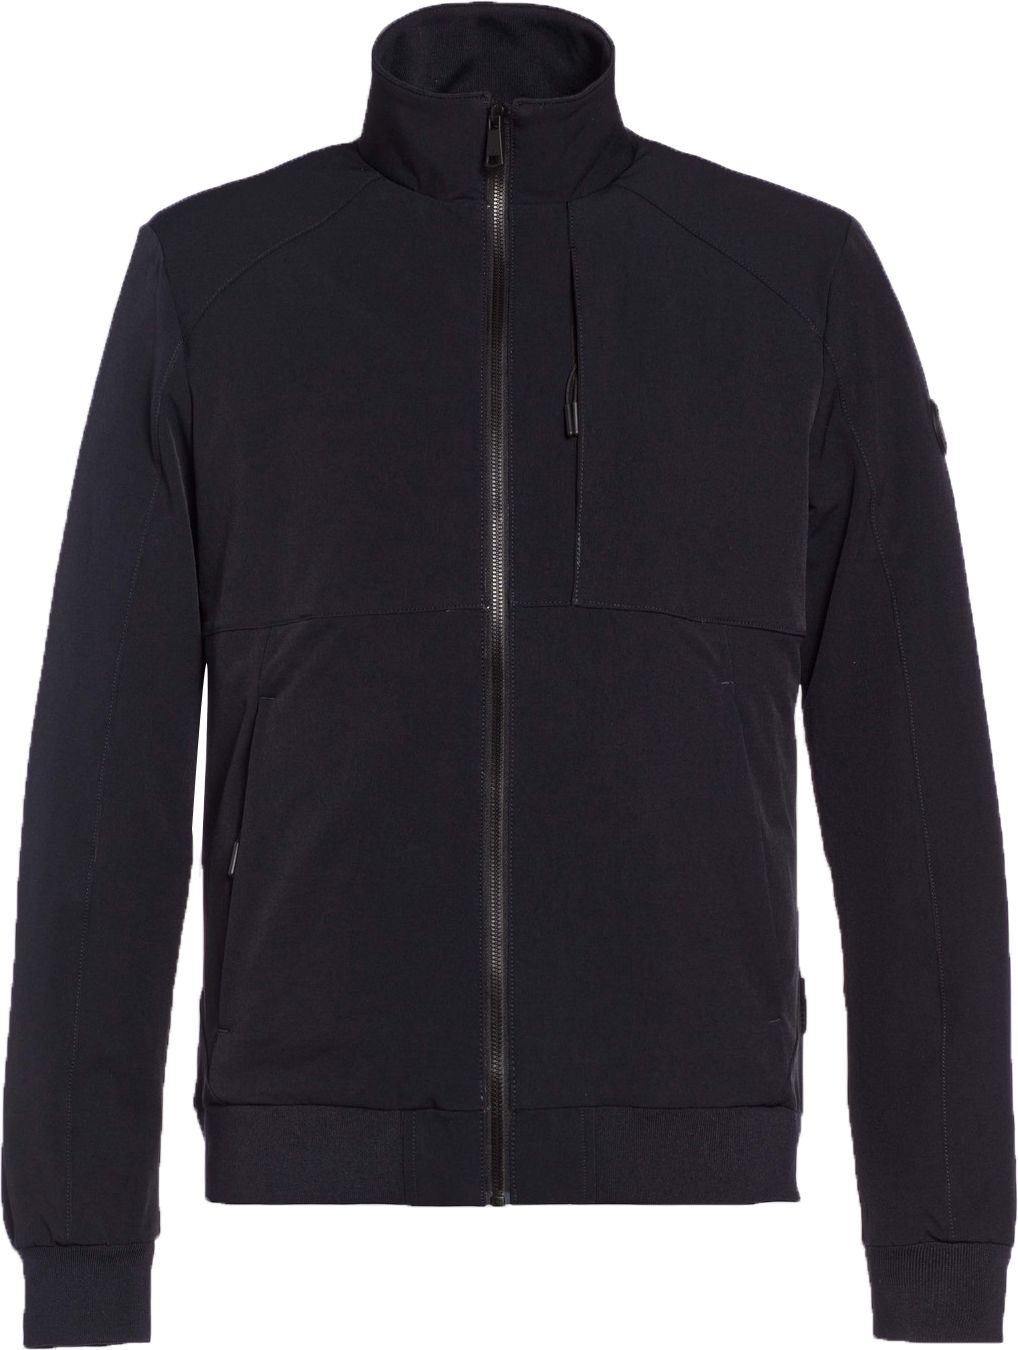 Reset bresk jacket navy dark blue size l